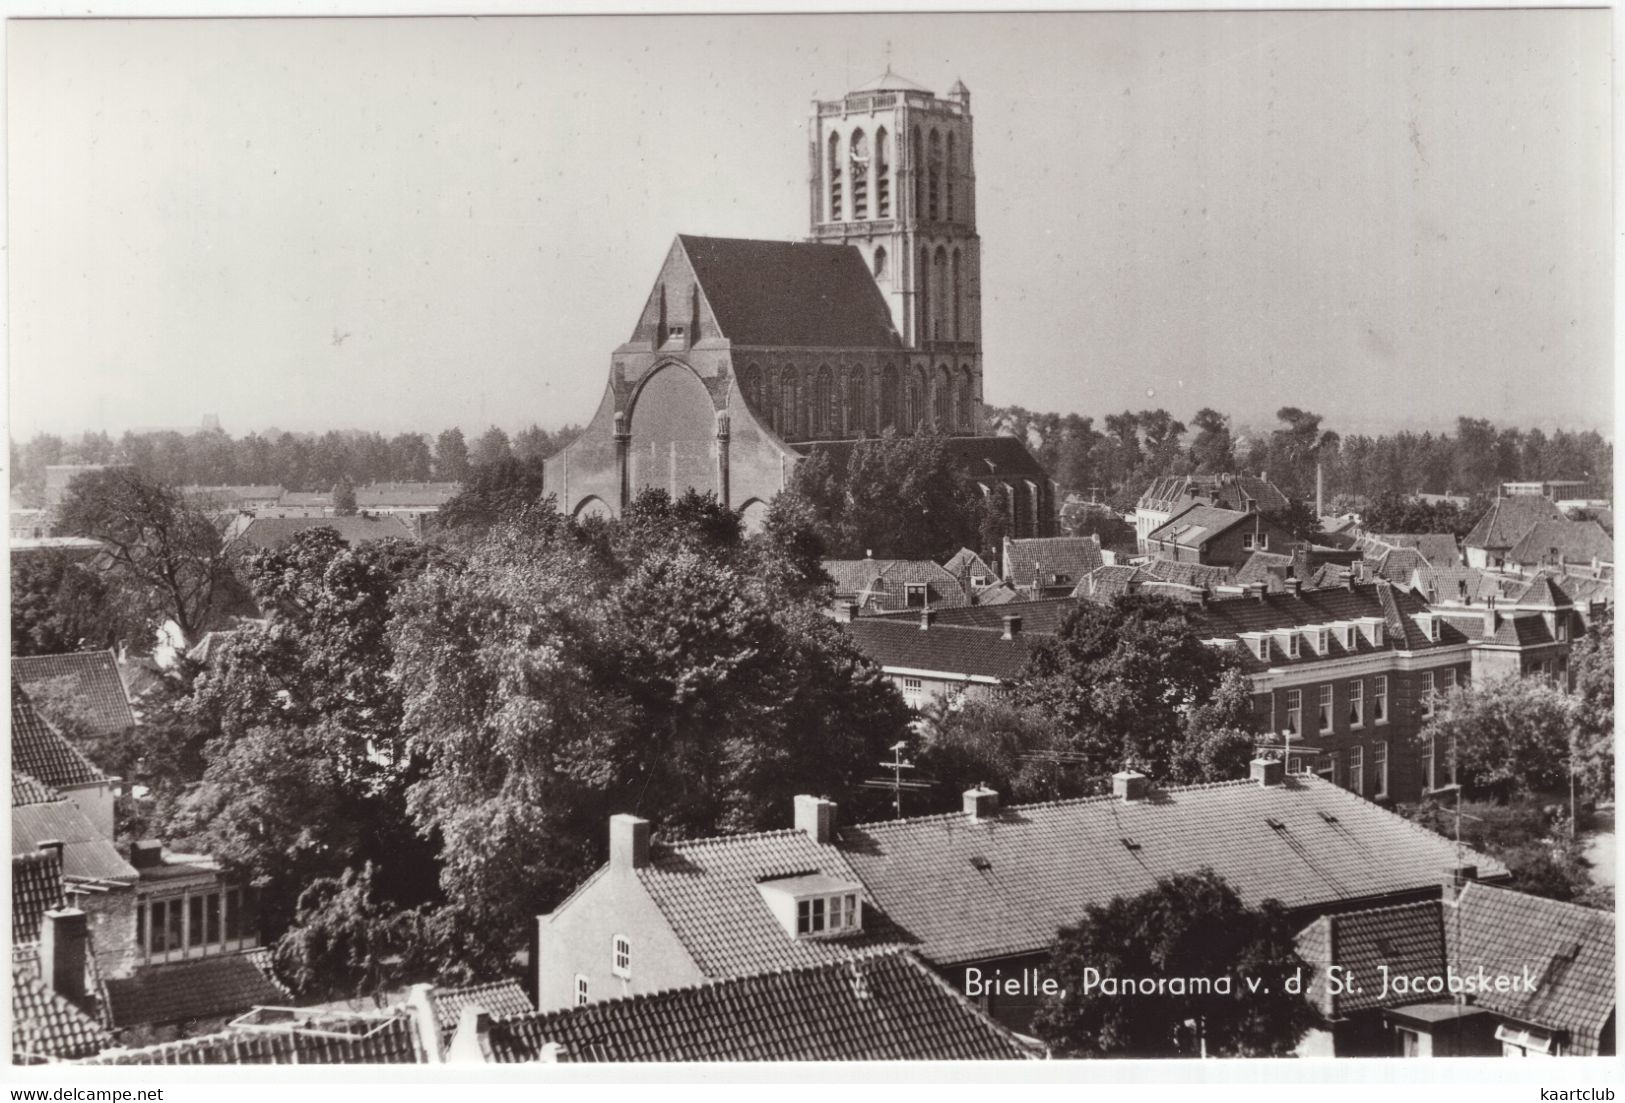 Brielle, Panorama V.d. St. Jacobskerk - (Zuid-Holland, Nederland / Holland) - Brielle